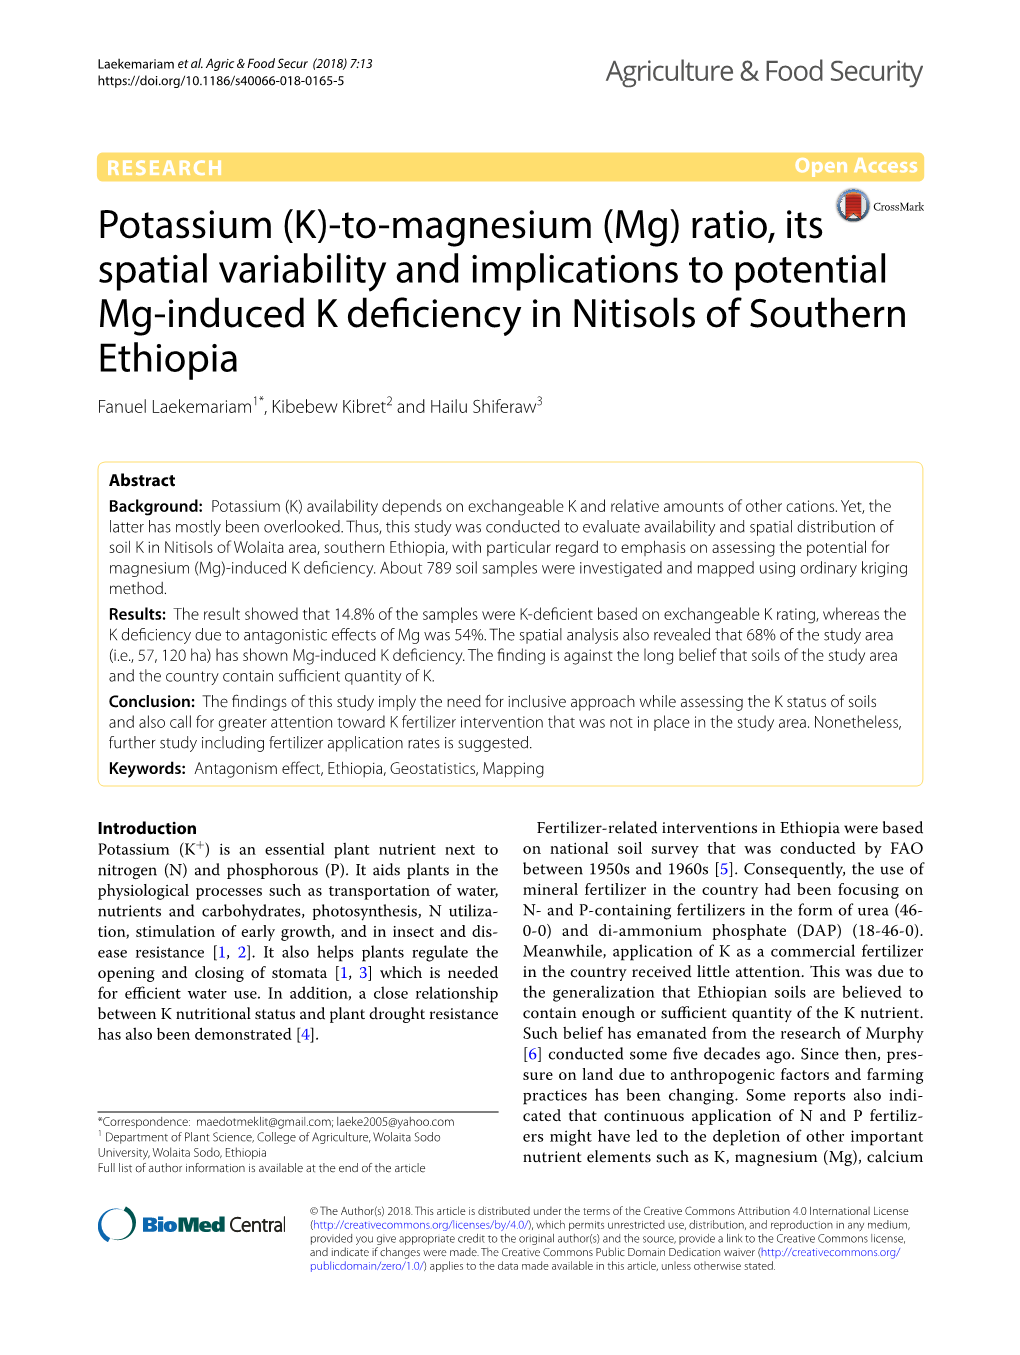 Potassium (K)-To-Magnesium (Mg) Ratio, Its Spatial Variability And